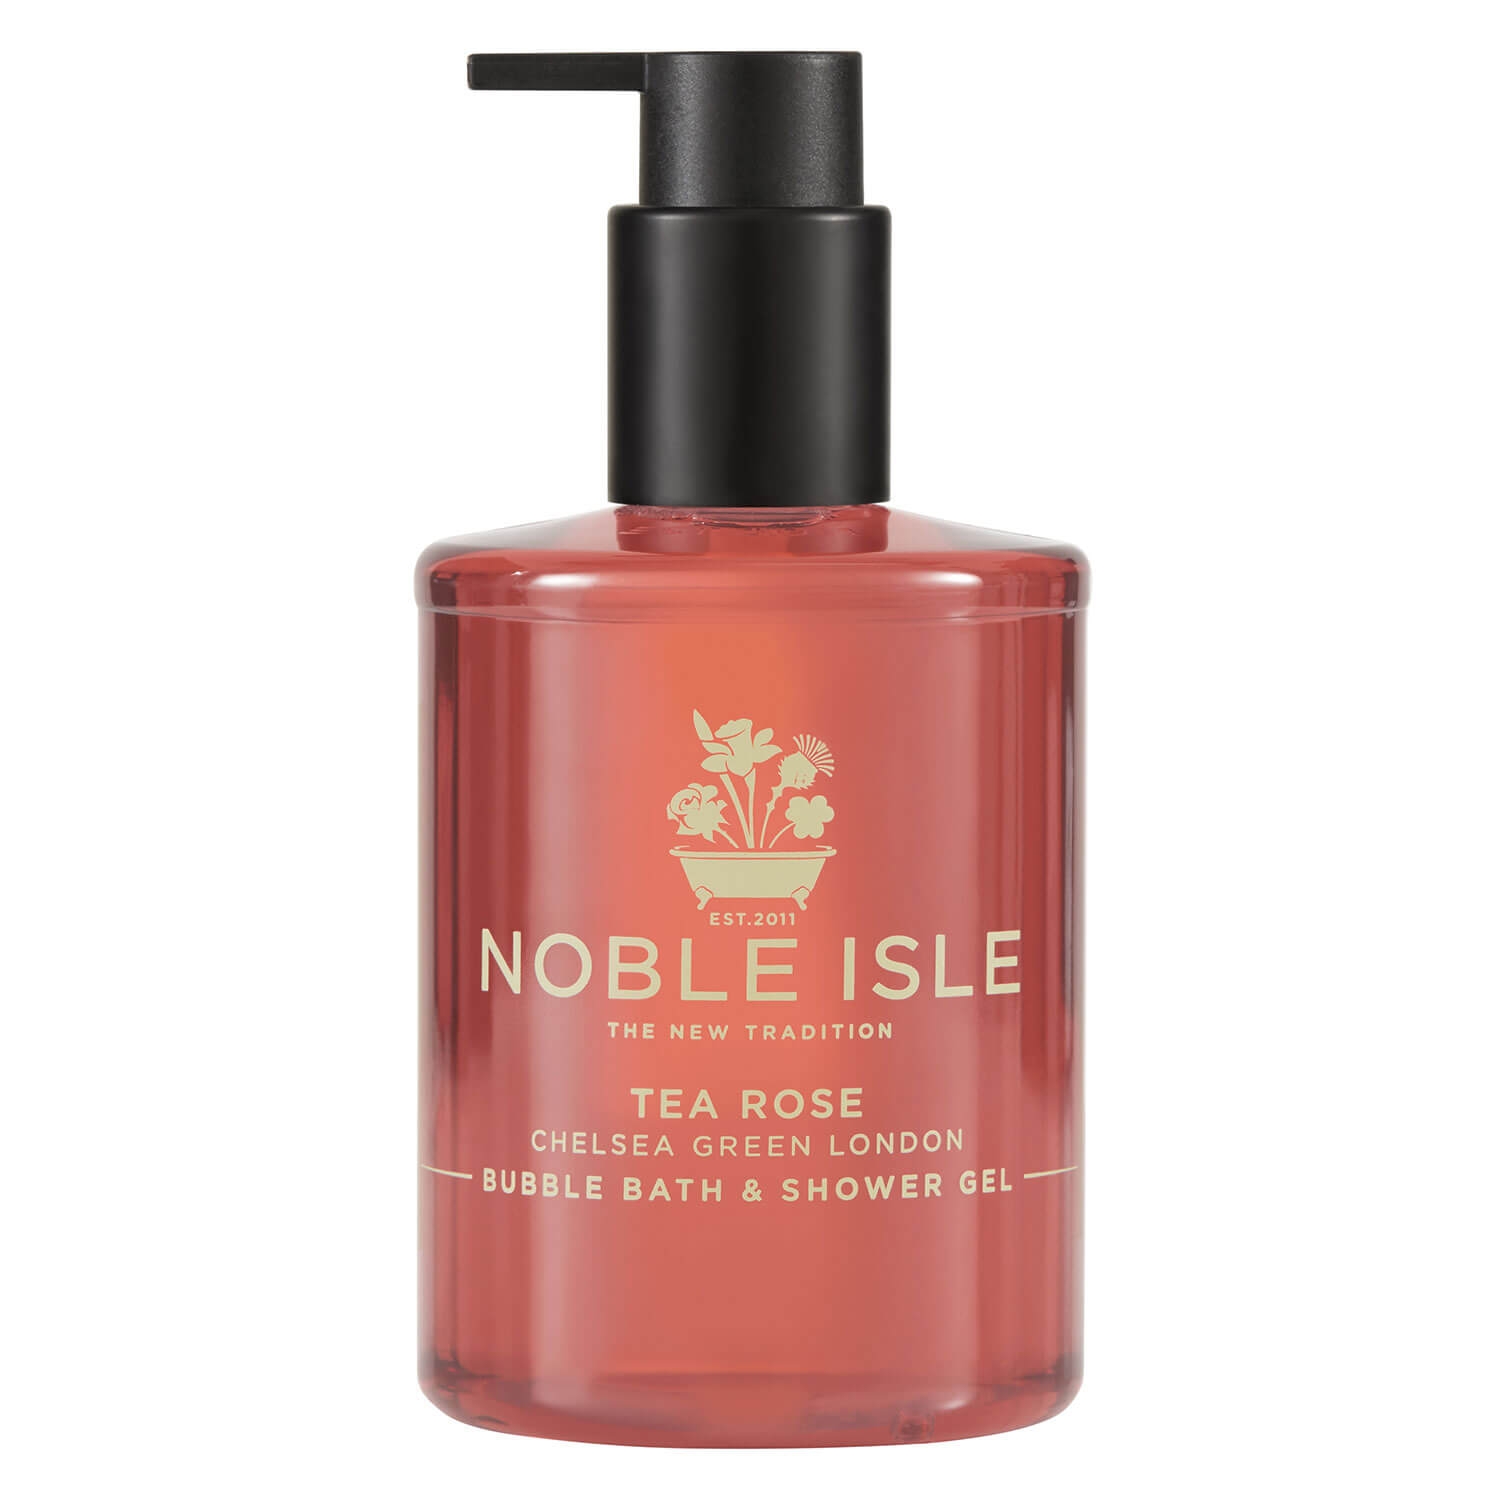 Produktbild von Noble Isle - Tea Rose Bubble Bath & Shower Gel